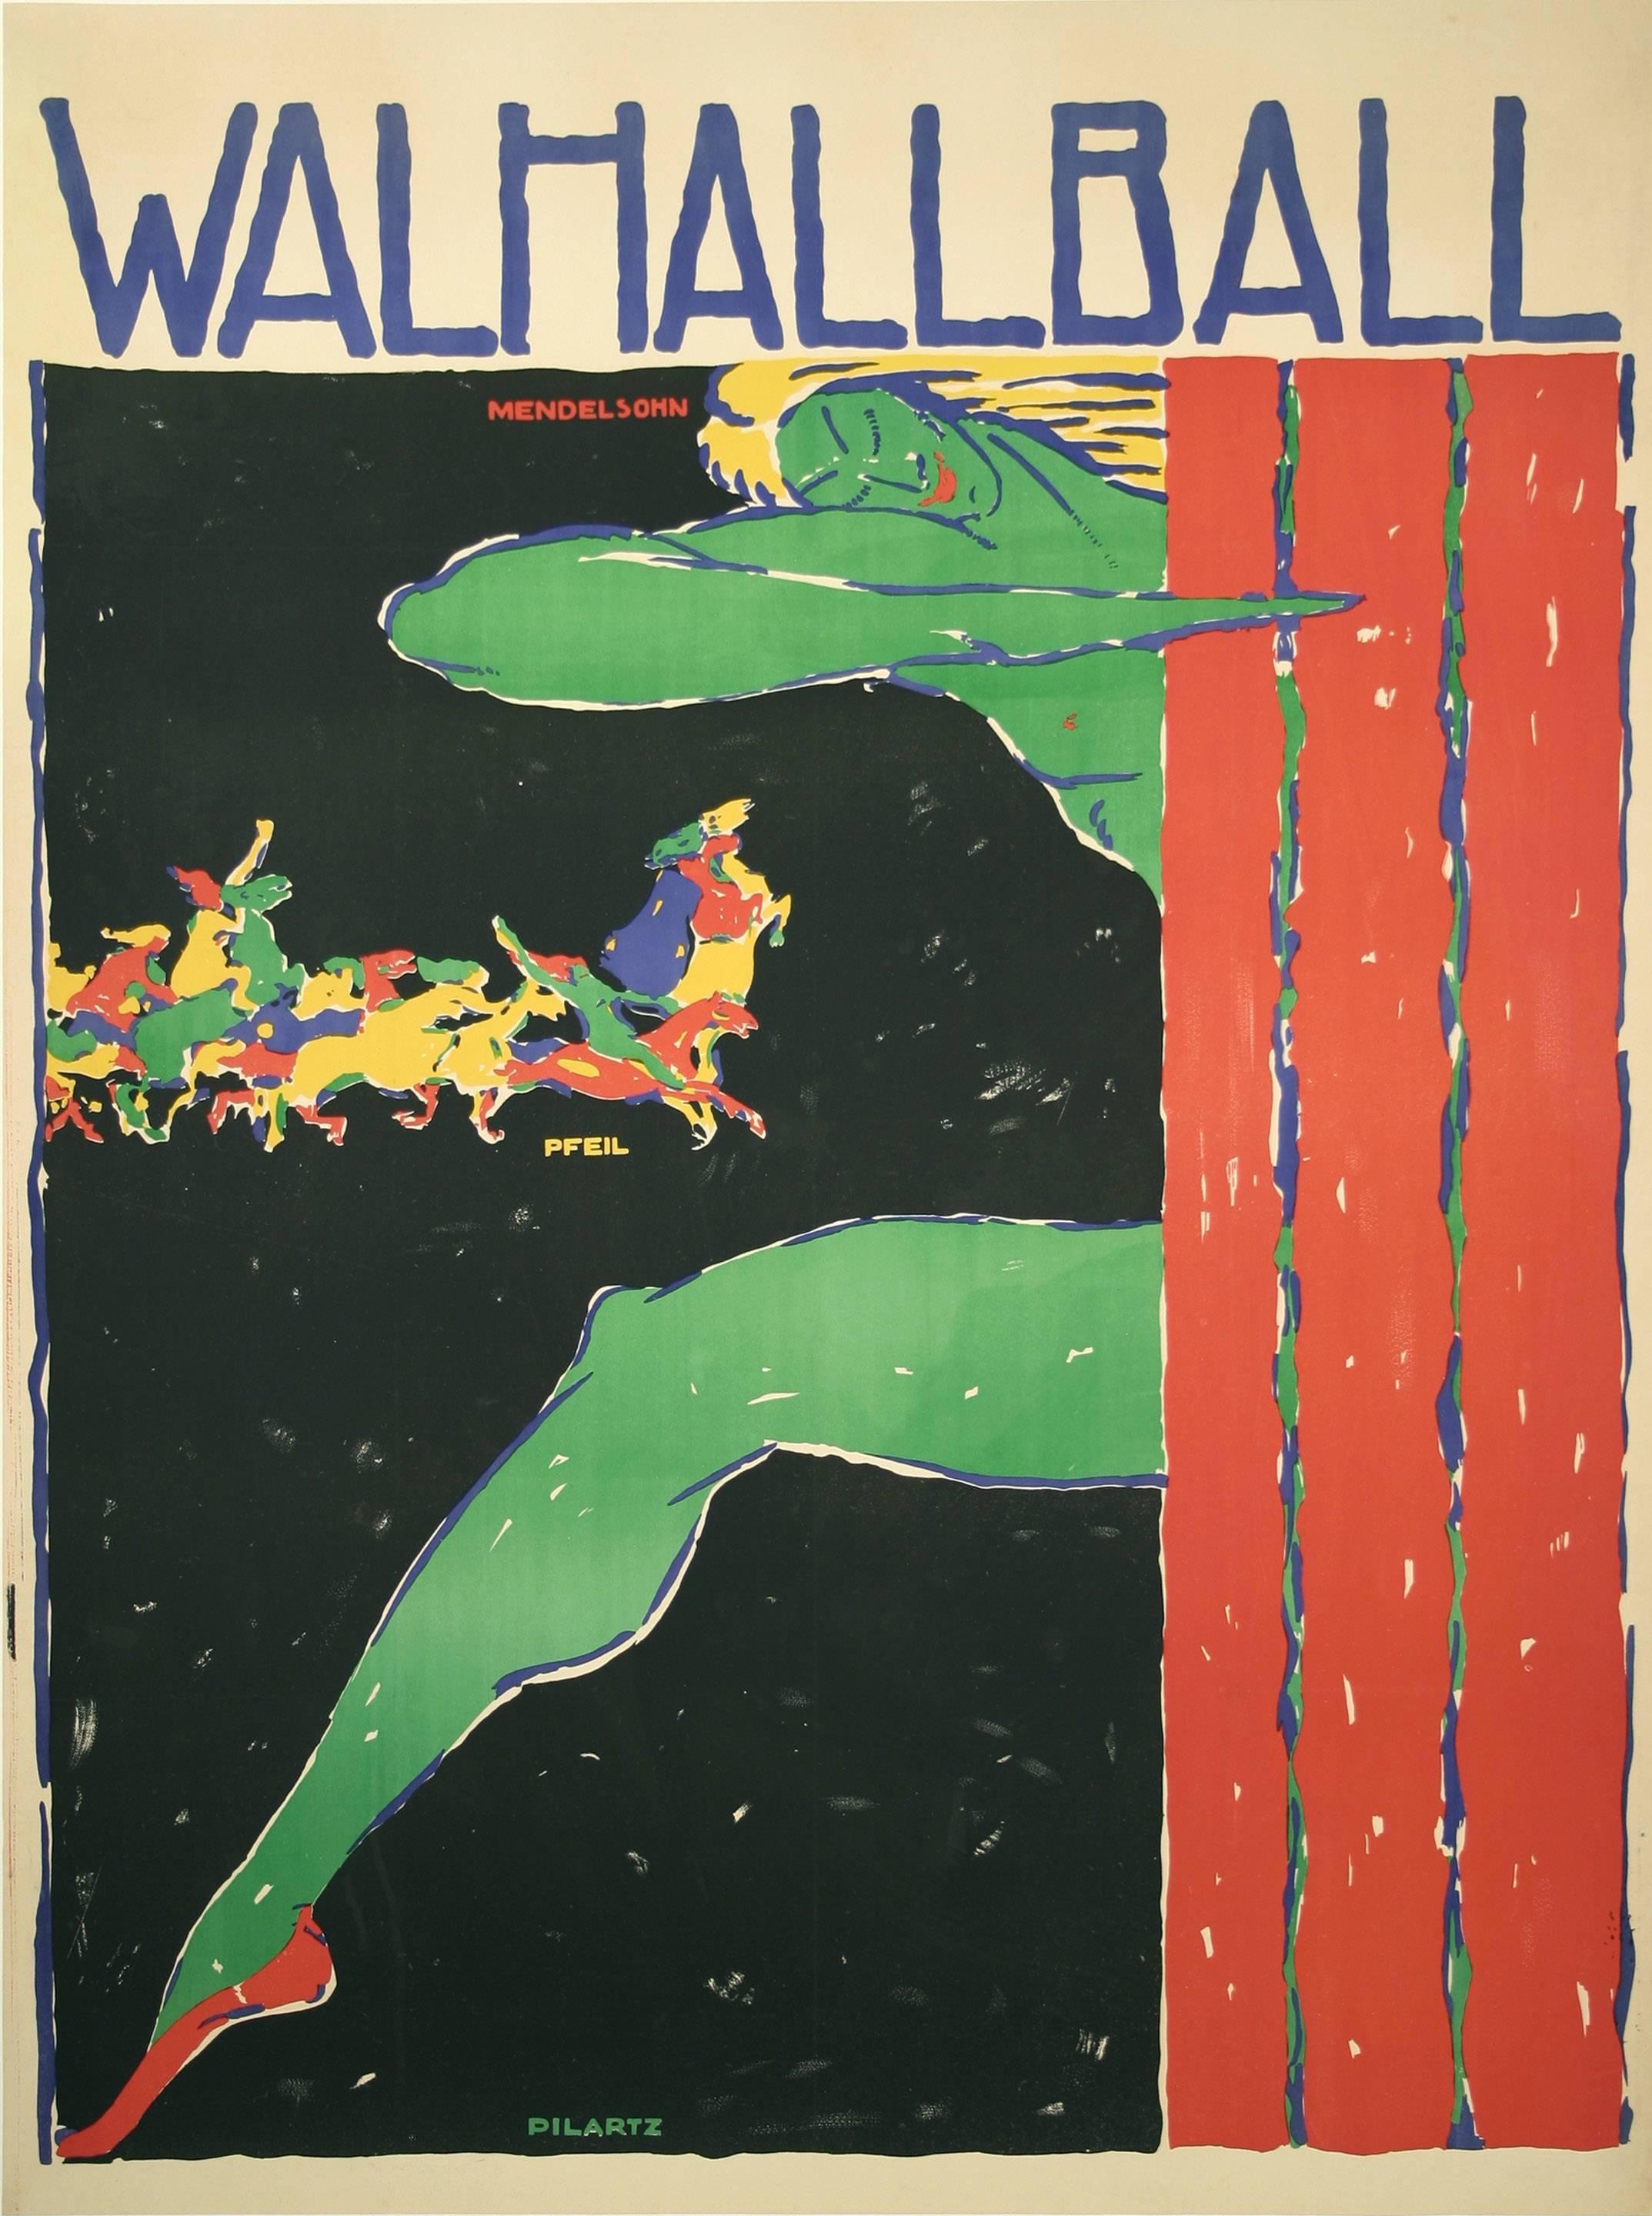 "Walhallball, " a German Stone Lithograph Theatre Festival Poster, 1905 - Print by Mendelsohn, Pilarz, Pfeil